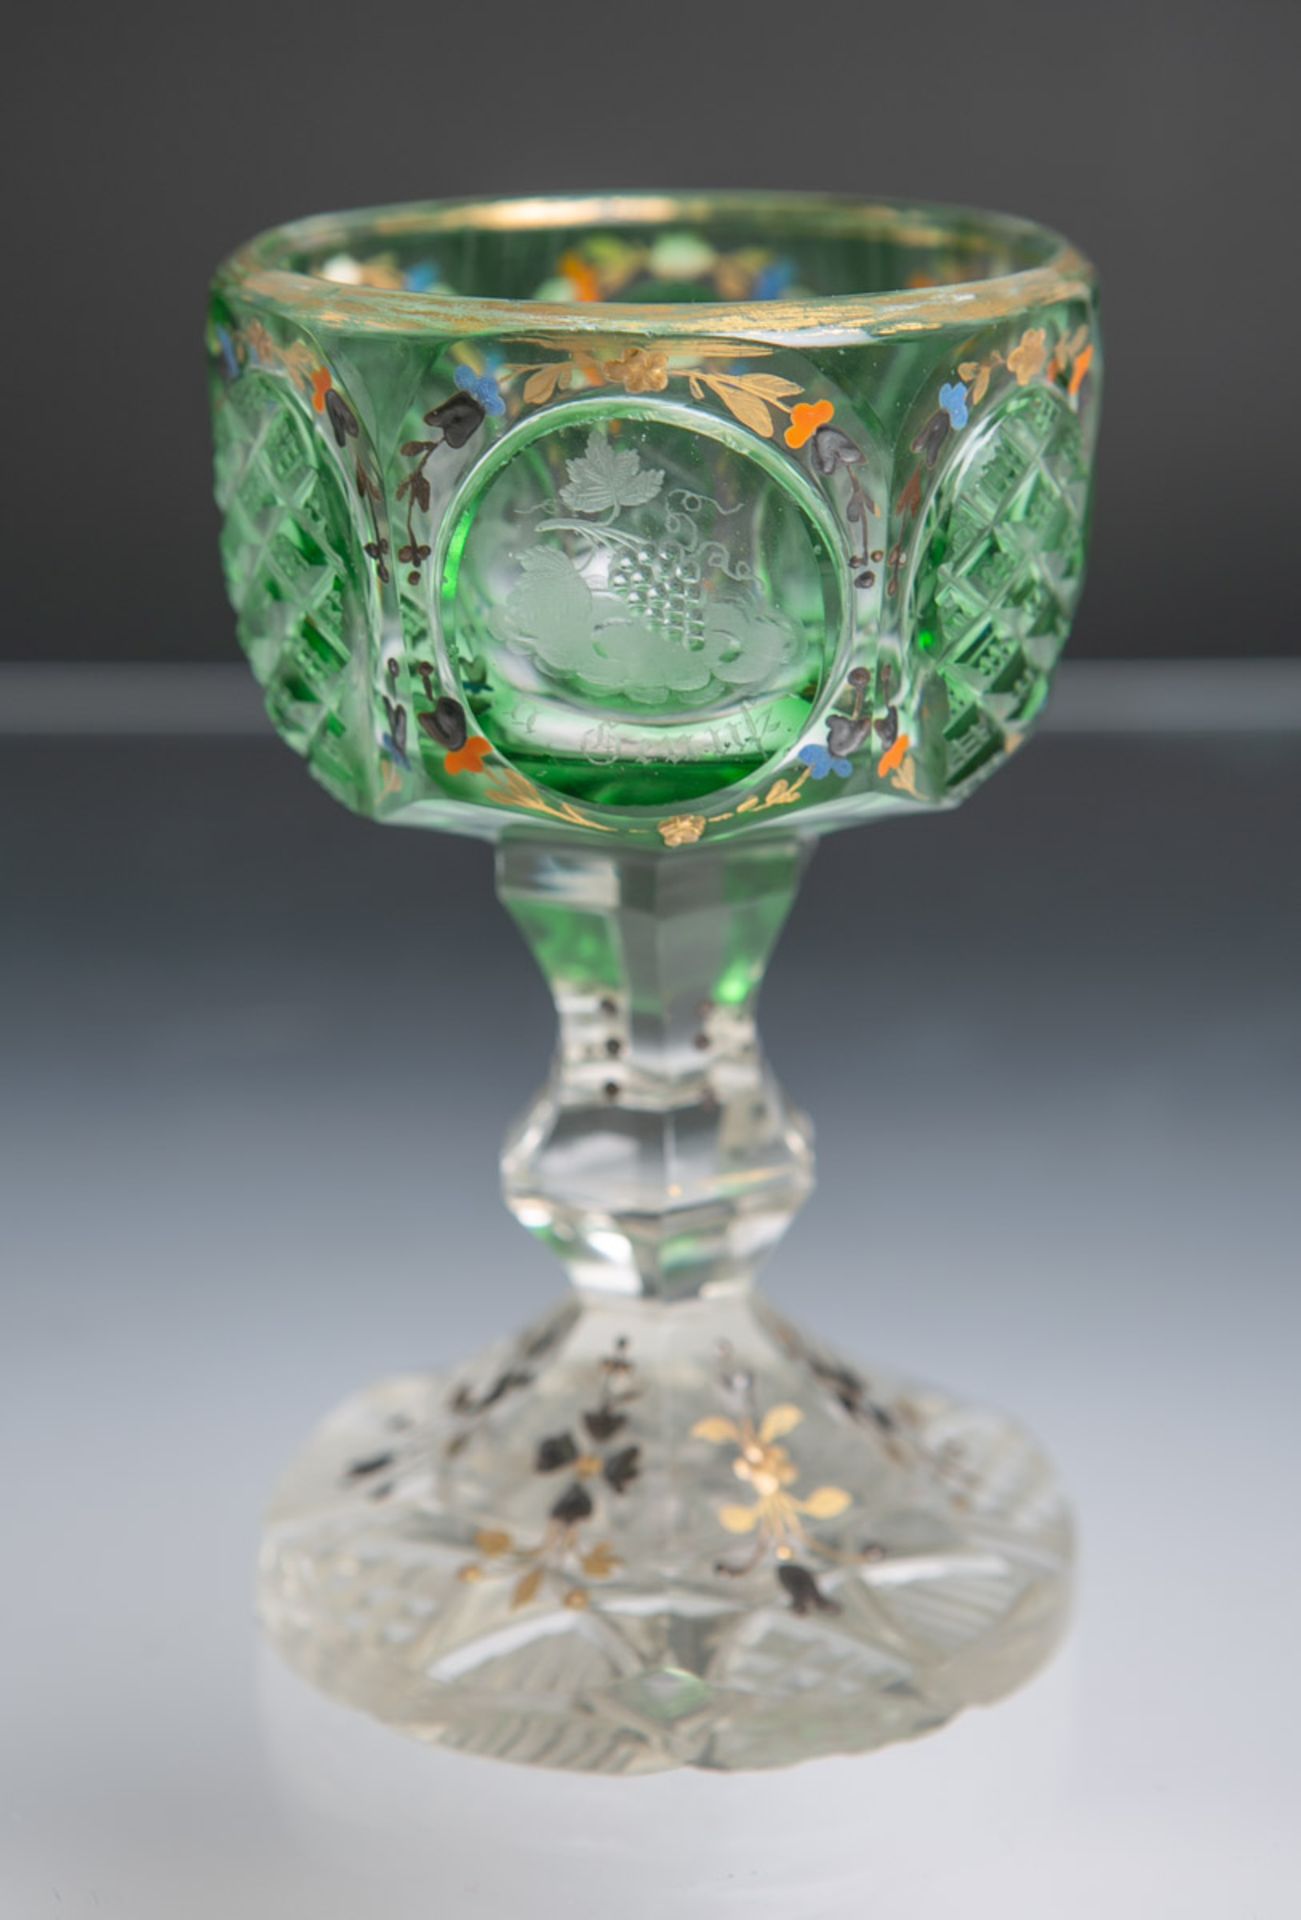 Kelchglas (Biedermeier, um 1830), klares Glas, teils grün überfangen, m. polychromer